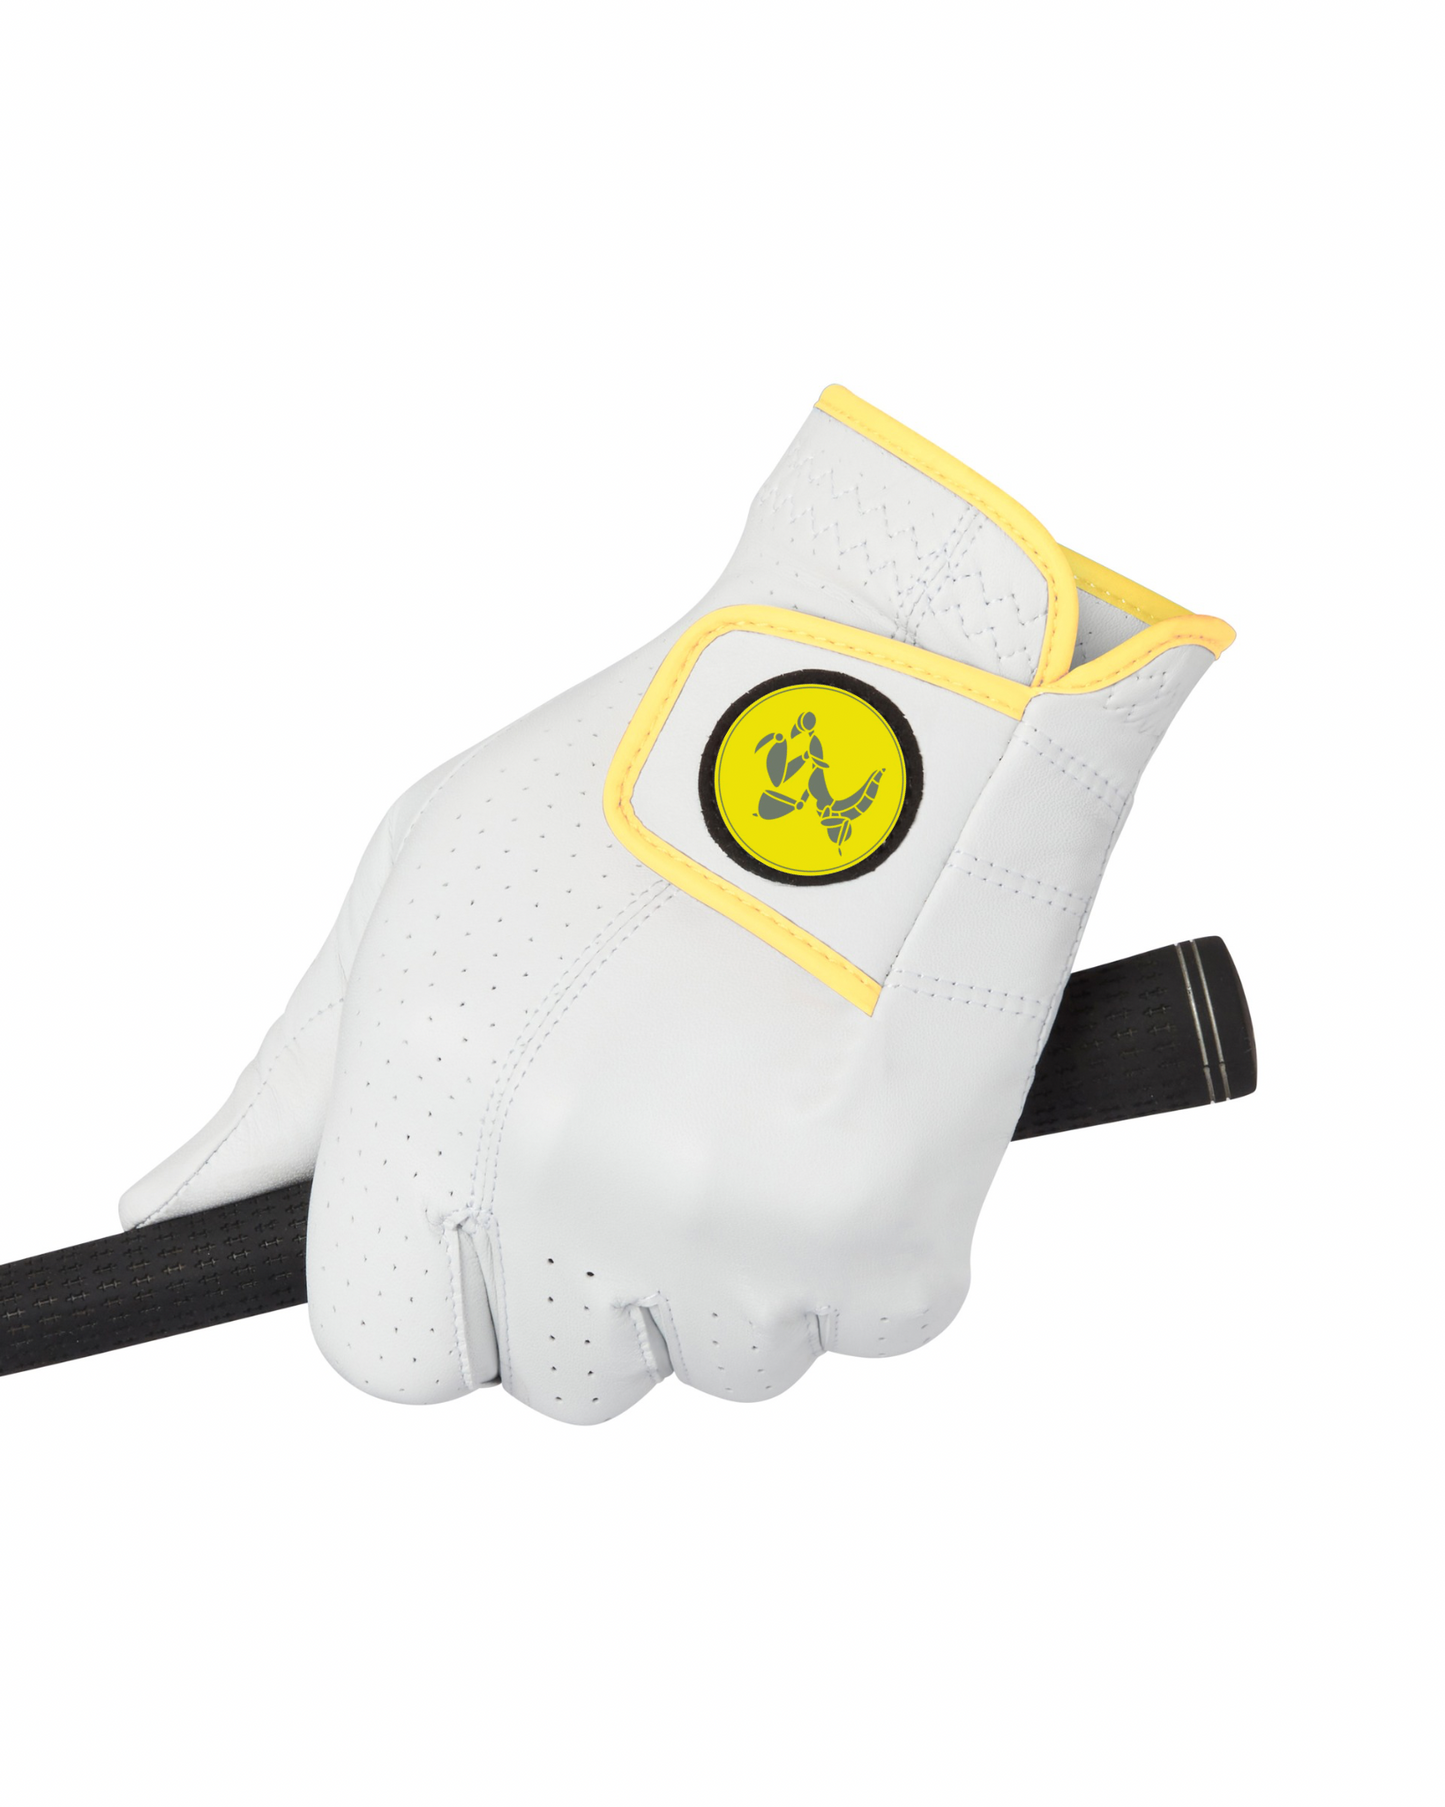 Ugogo Golf premium cabretta leather glove yellow logo & trim